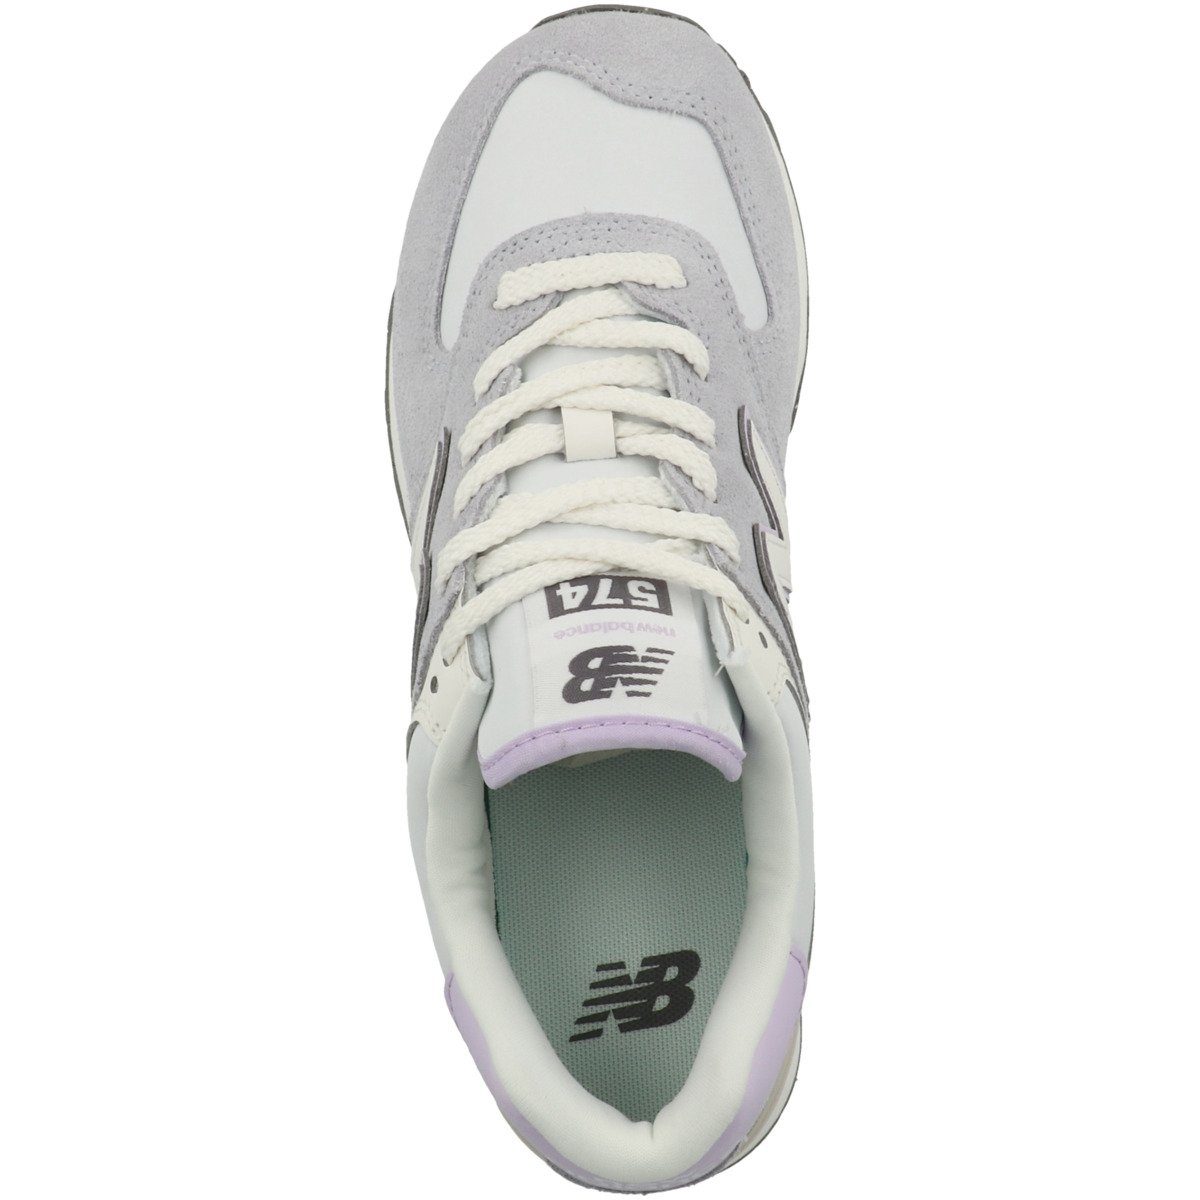 WL 574 Damen Sneaker grau New Balance